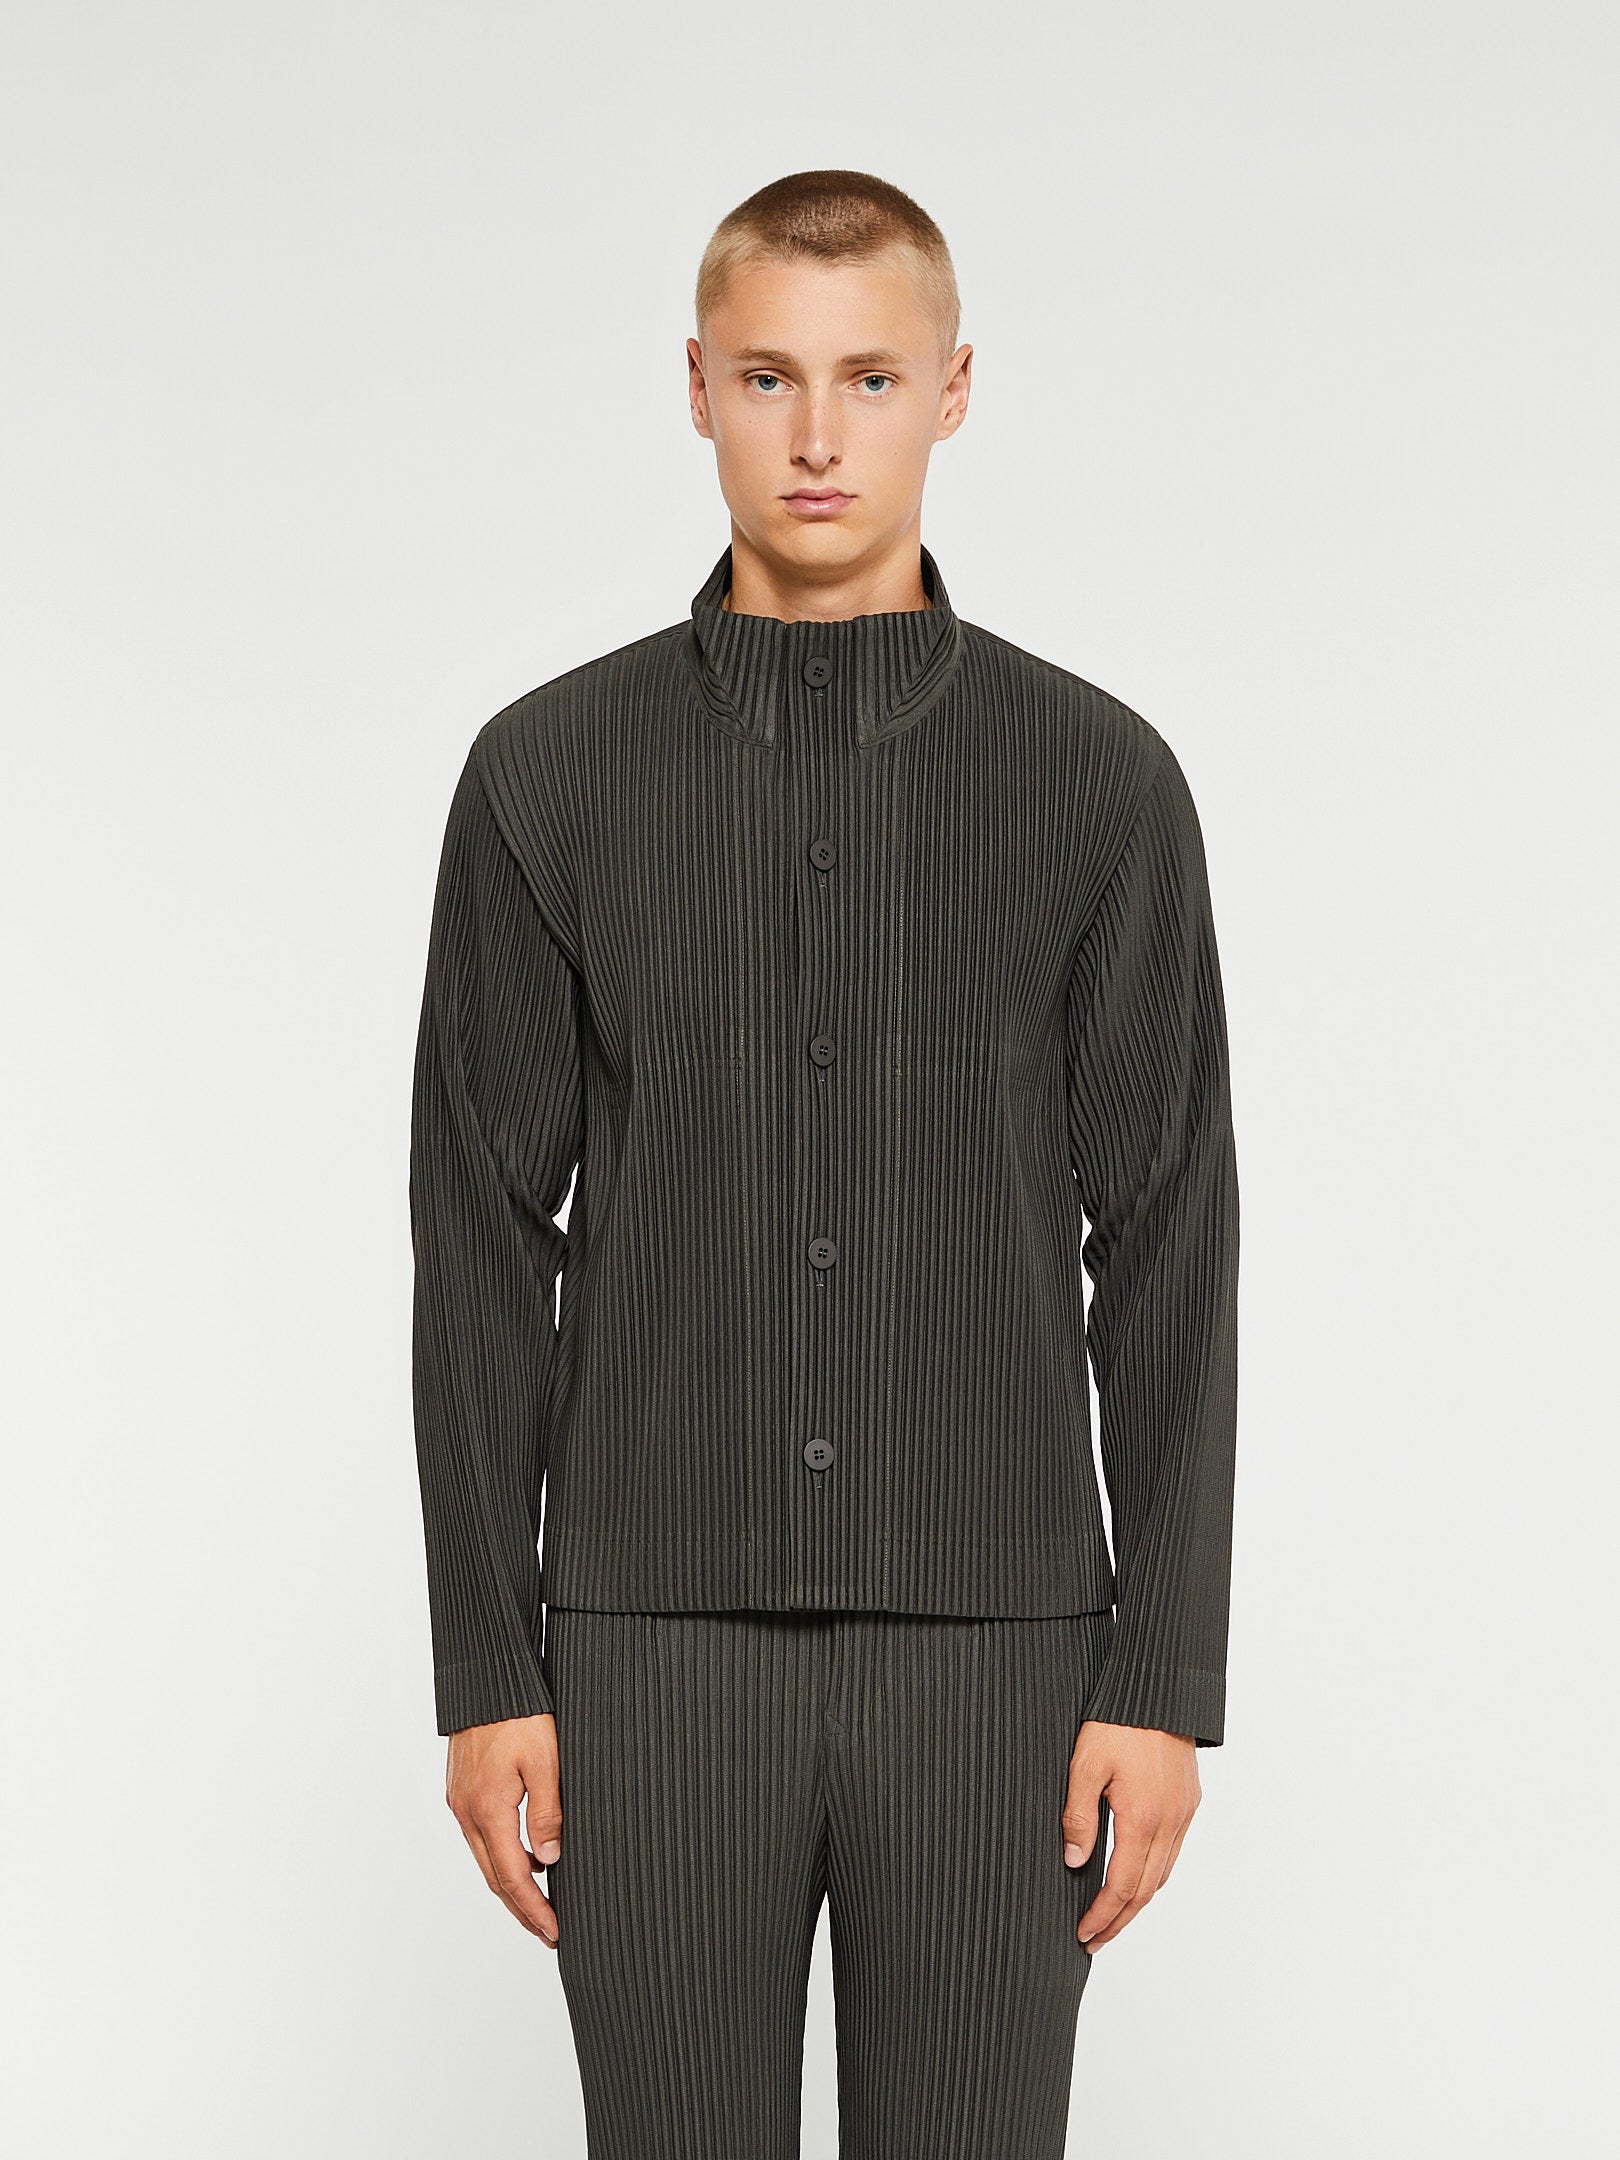 Homme Plisse - Tailored Pleats Jacket in Ebony Khaki